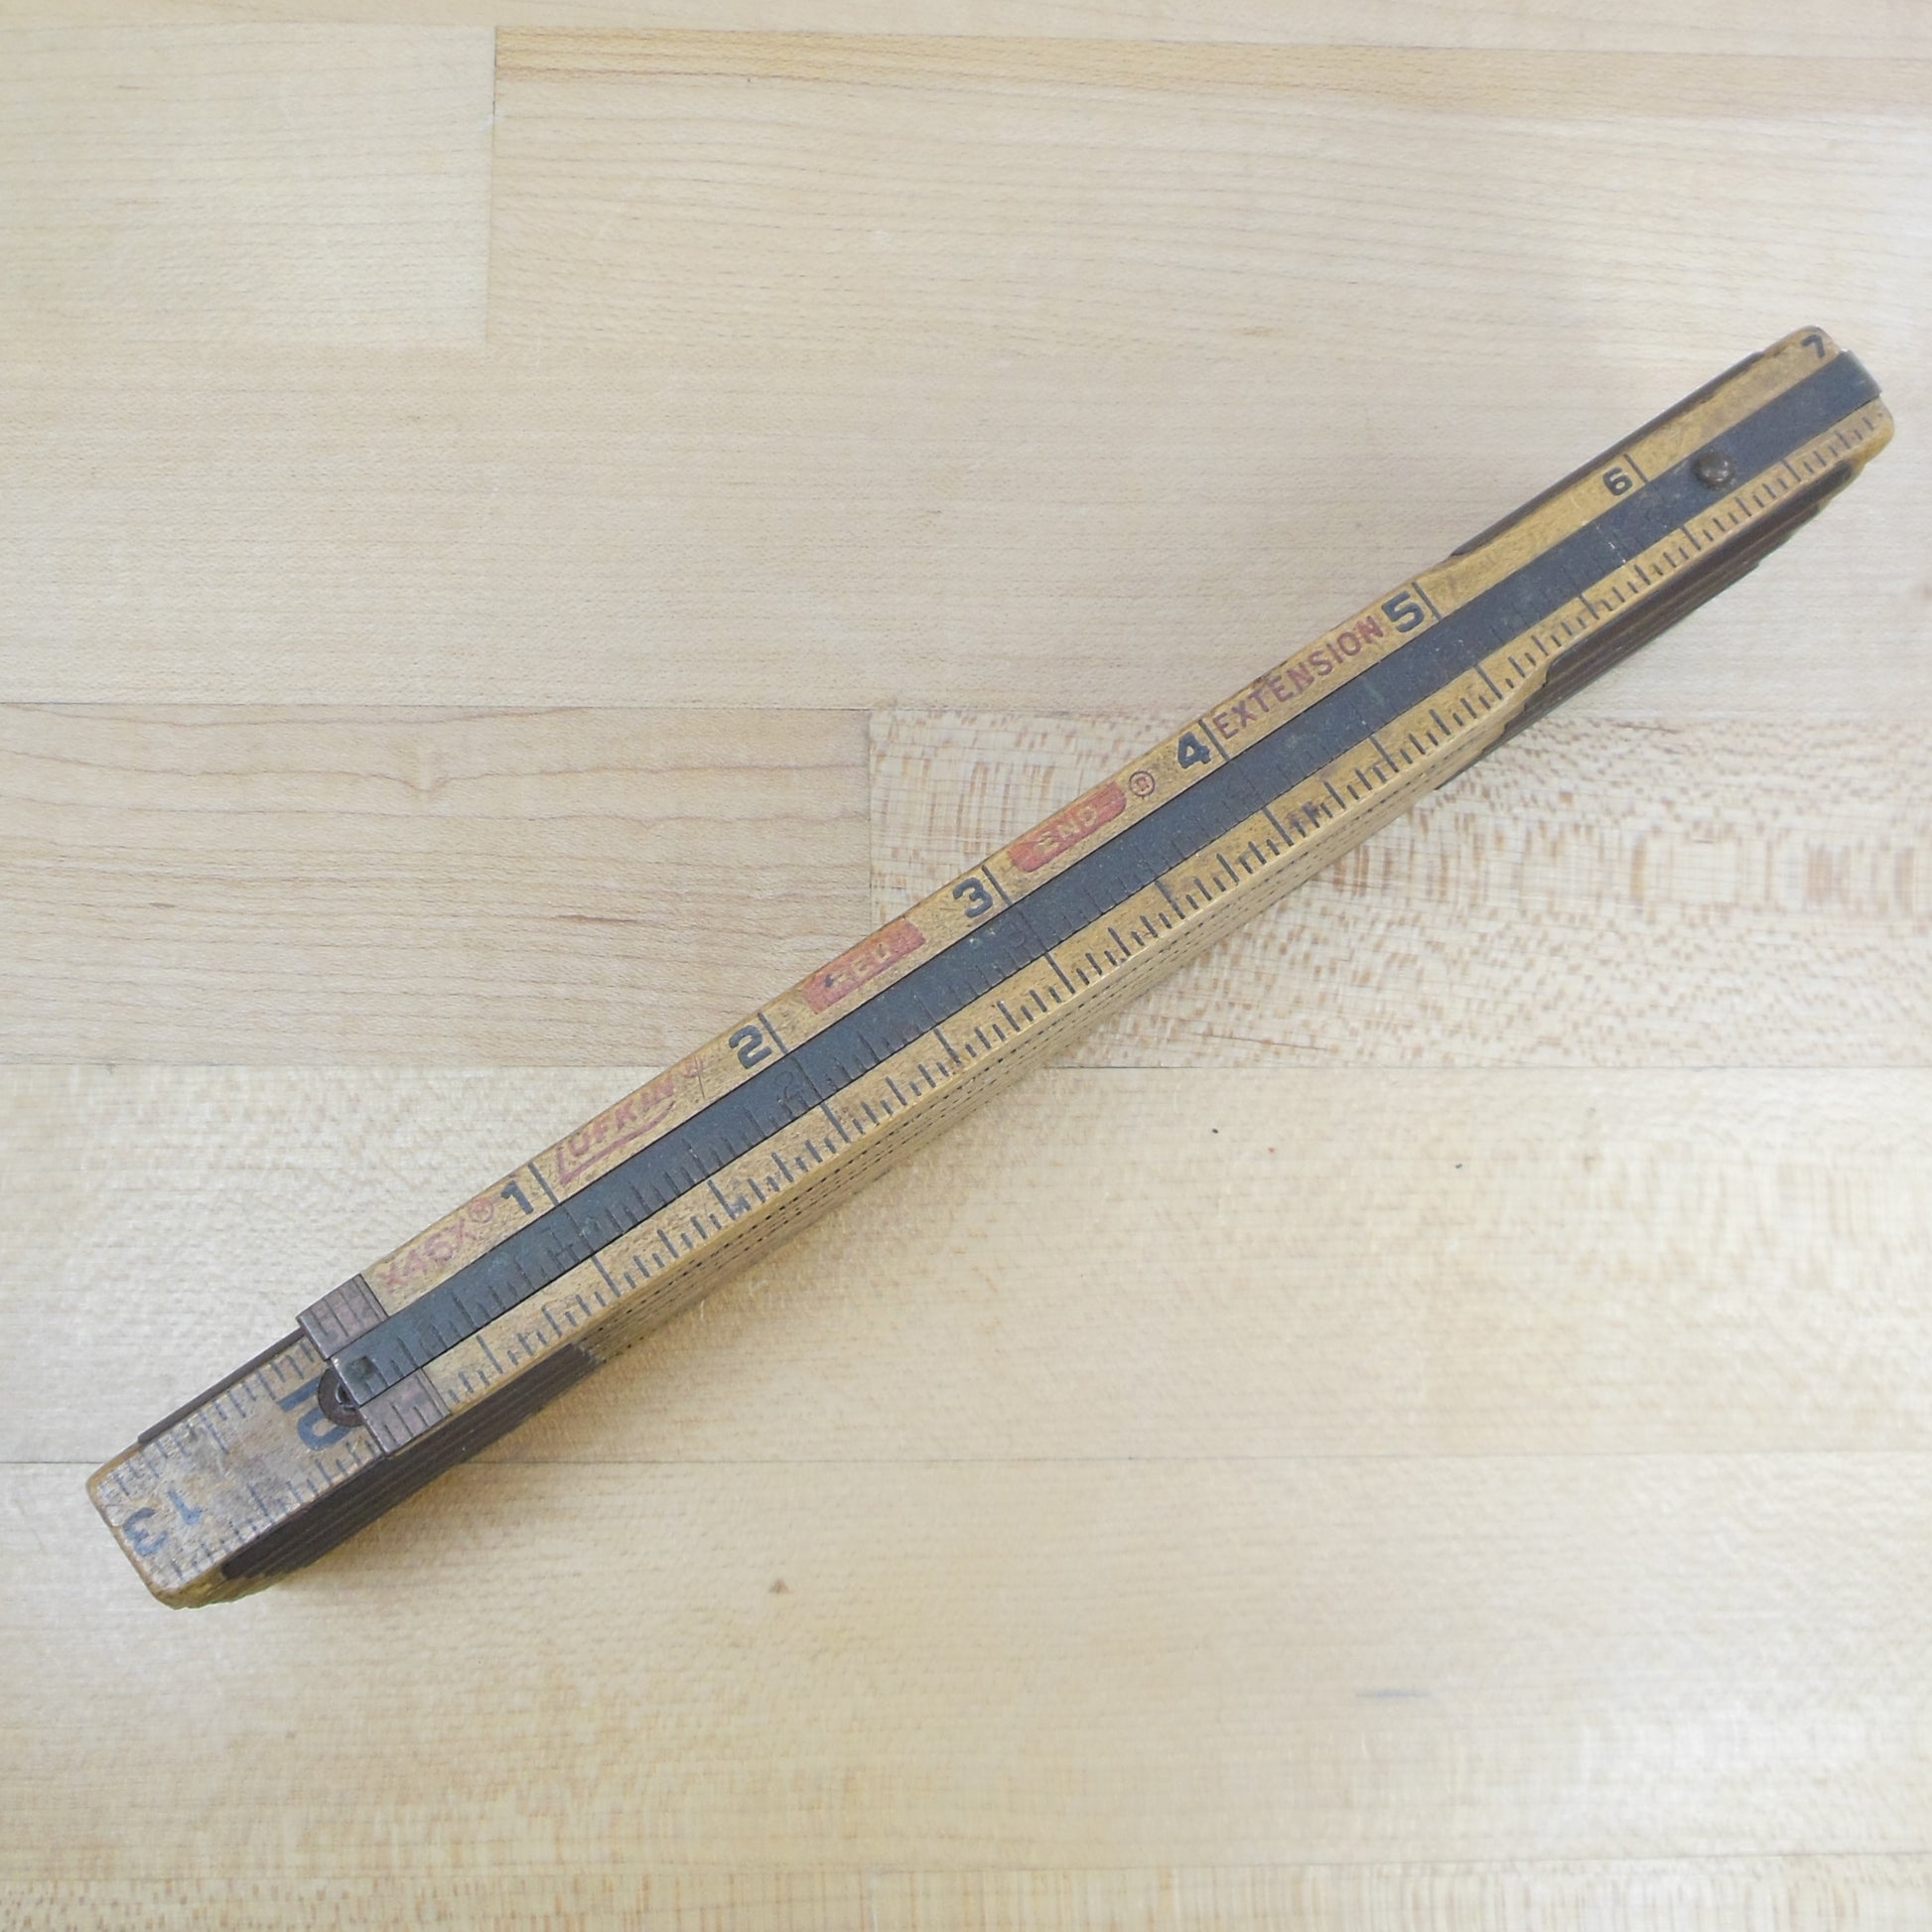 Lufkin X46X Red End 6' Folding Wood Ruler Rule Extension Vintage Used